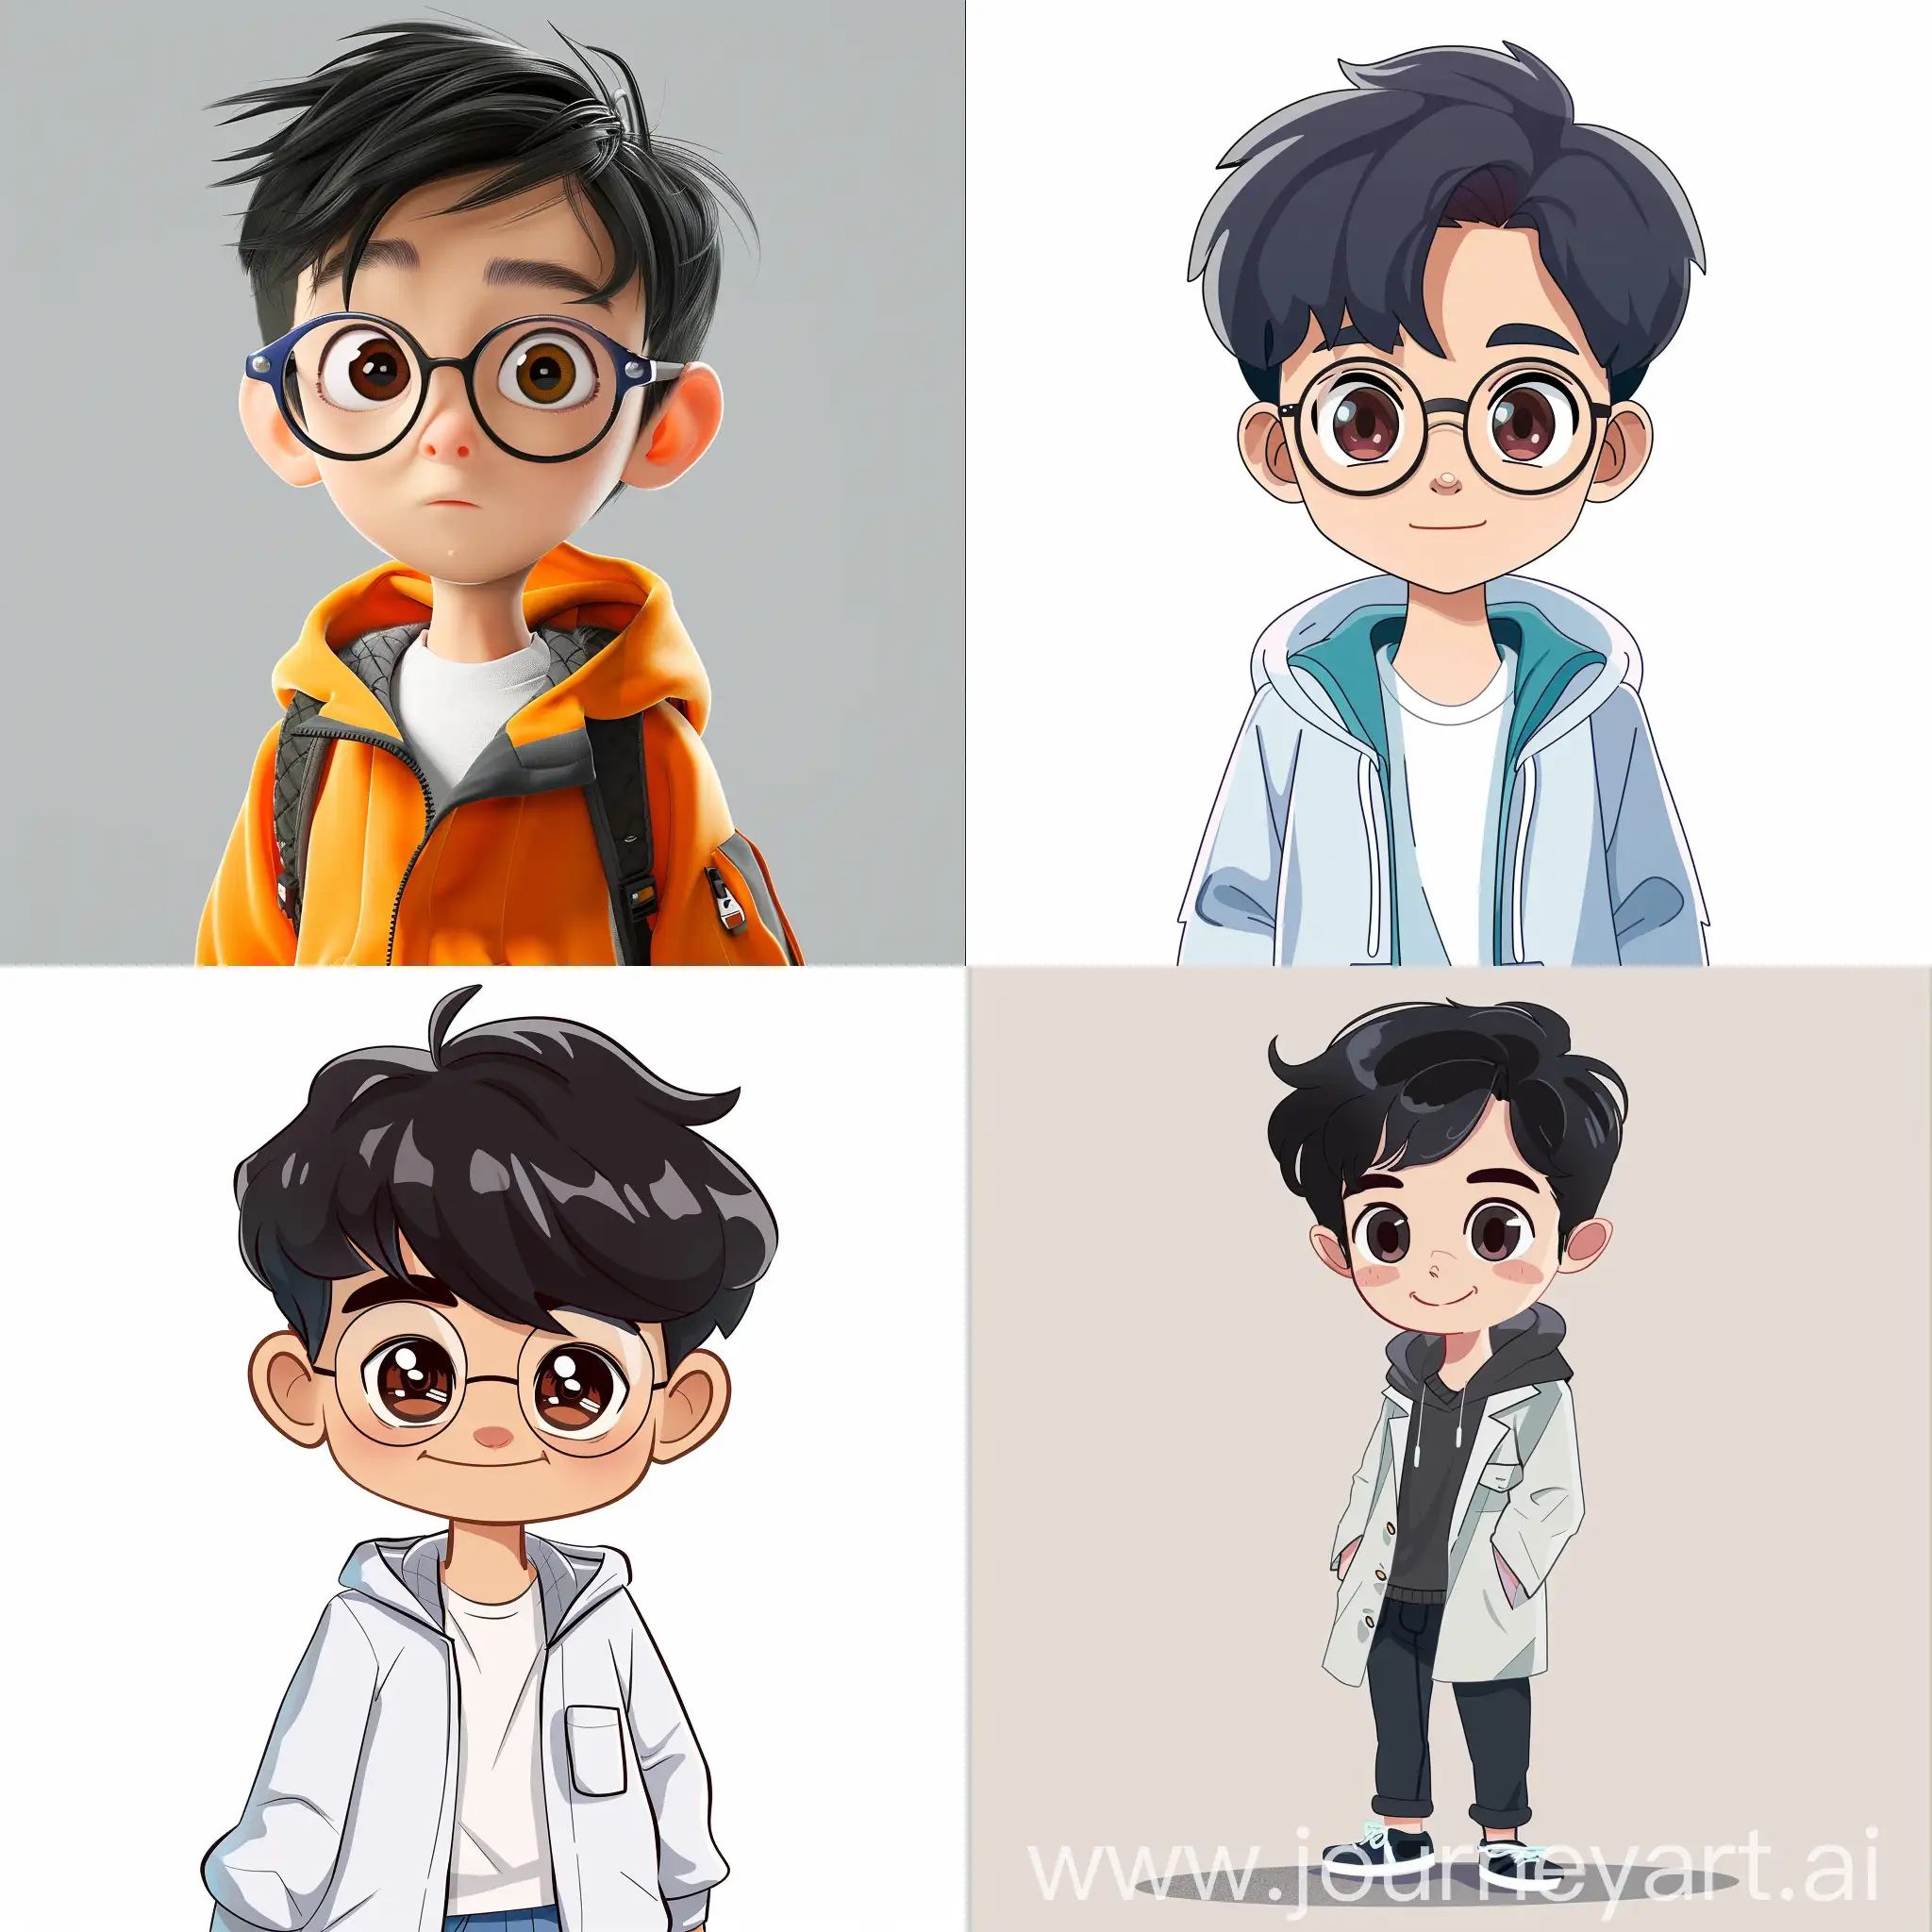 Adventurous-Korean-Boy-Cute-and-Smart-Science-Enthusiast